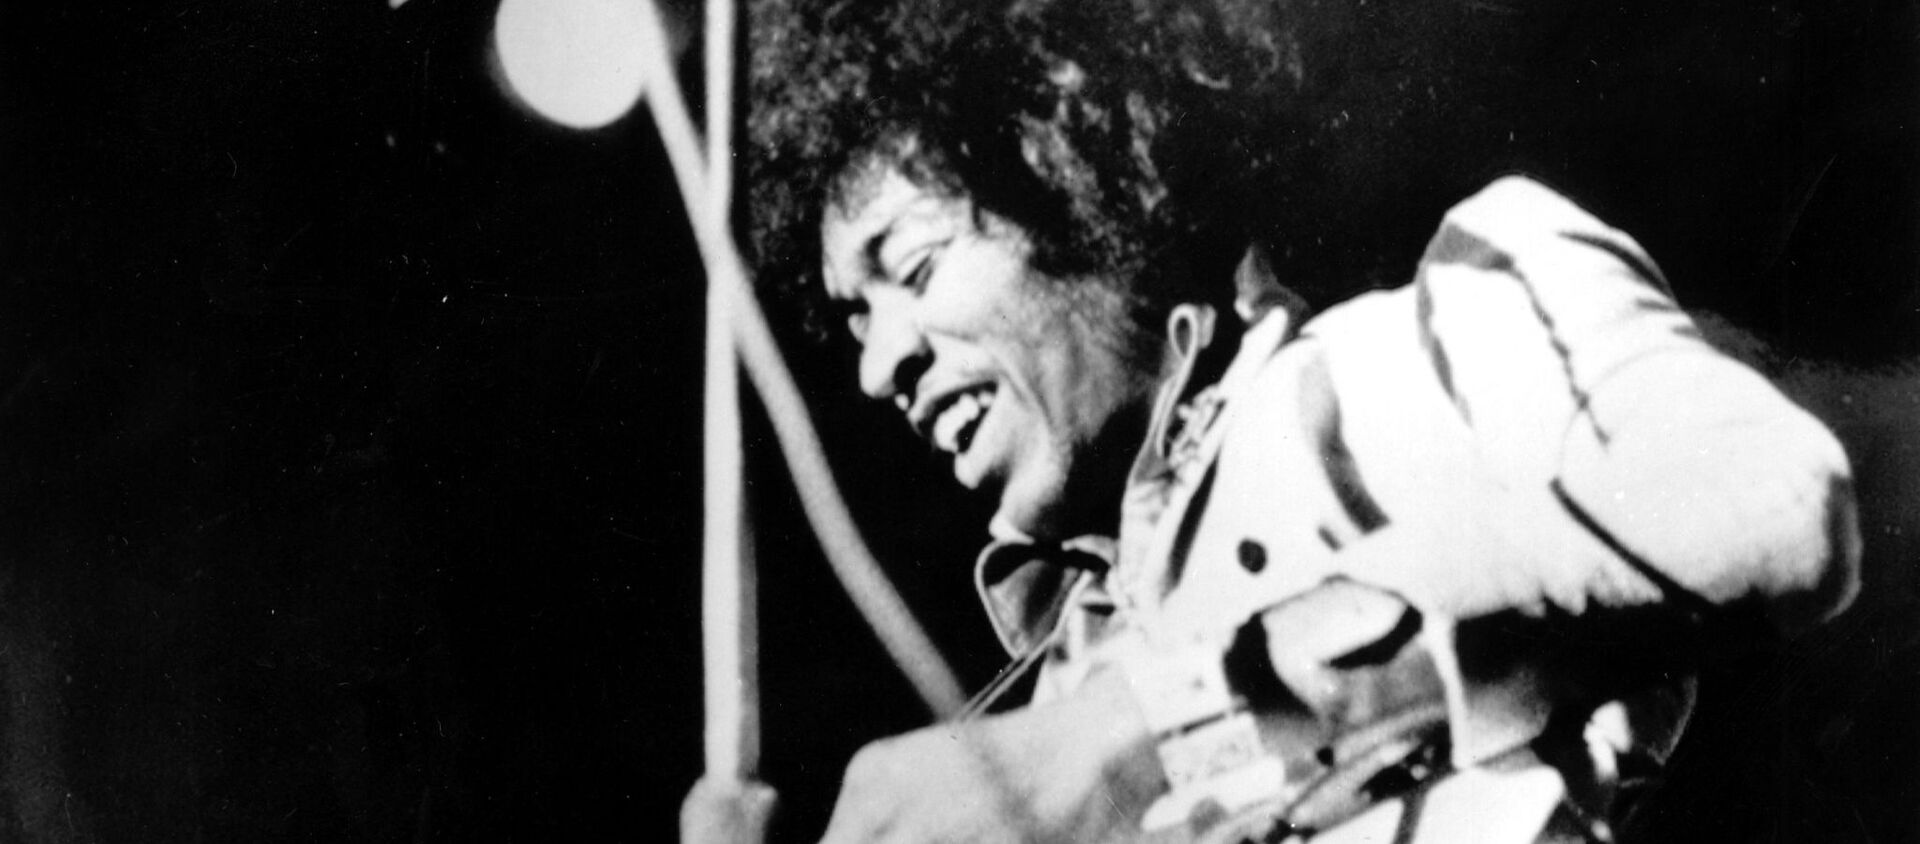 Jimi Hendrix, guitarrista y cantante estadounidense - Sputnik Mundo, 1920, 18.09.2020